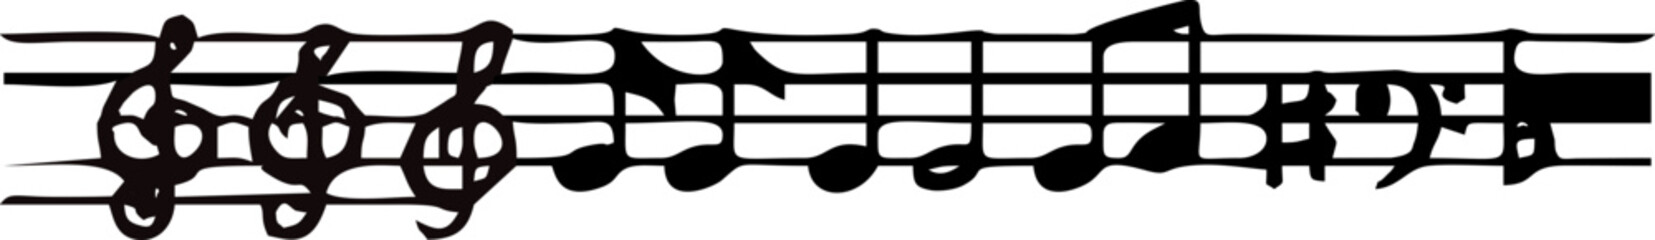 illustration vector graphic of musicnote icon